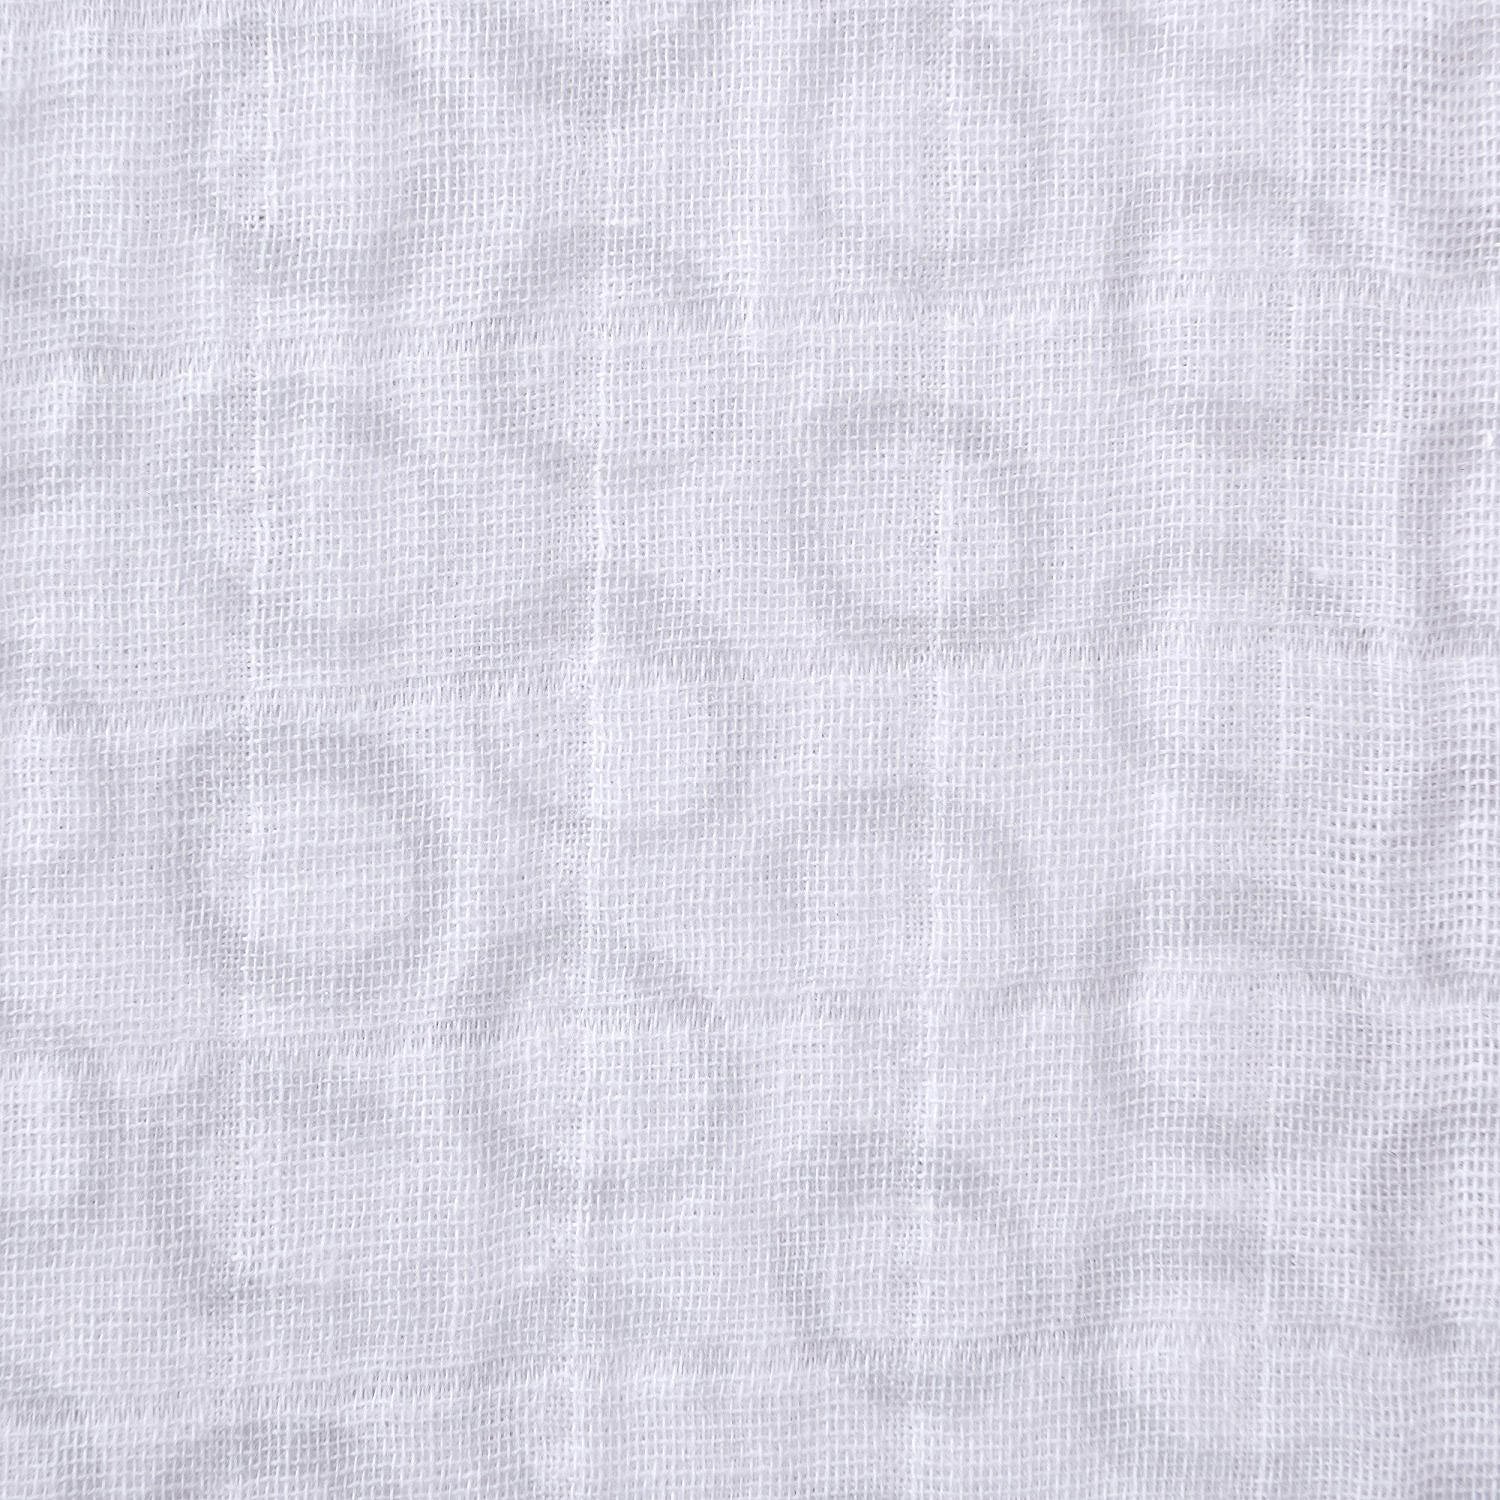 HALO Sleepsack, 100% Cotton Wearable Blanket, Swaddle Transition Sleeping Bag, TOG 0.5, Circles Grey, Medium, 6-12 Months